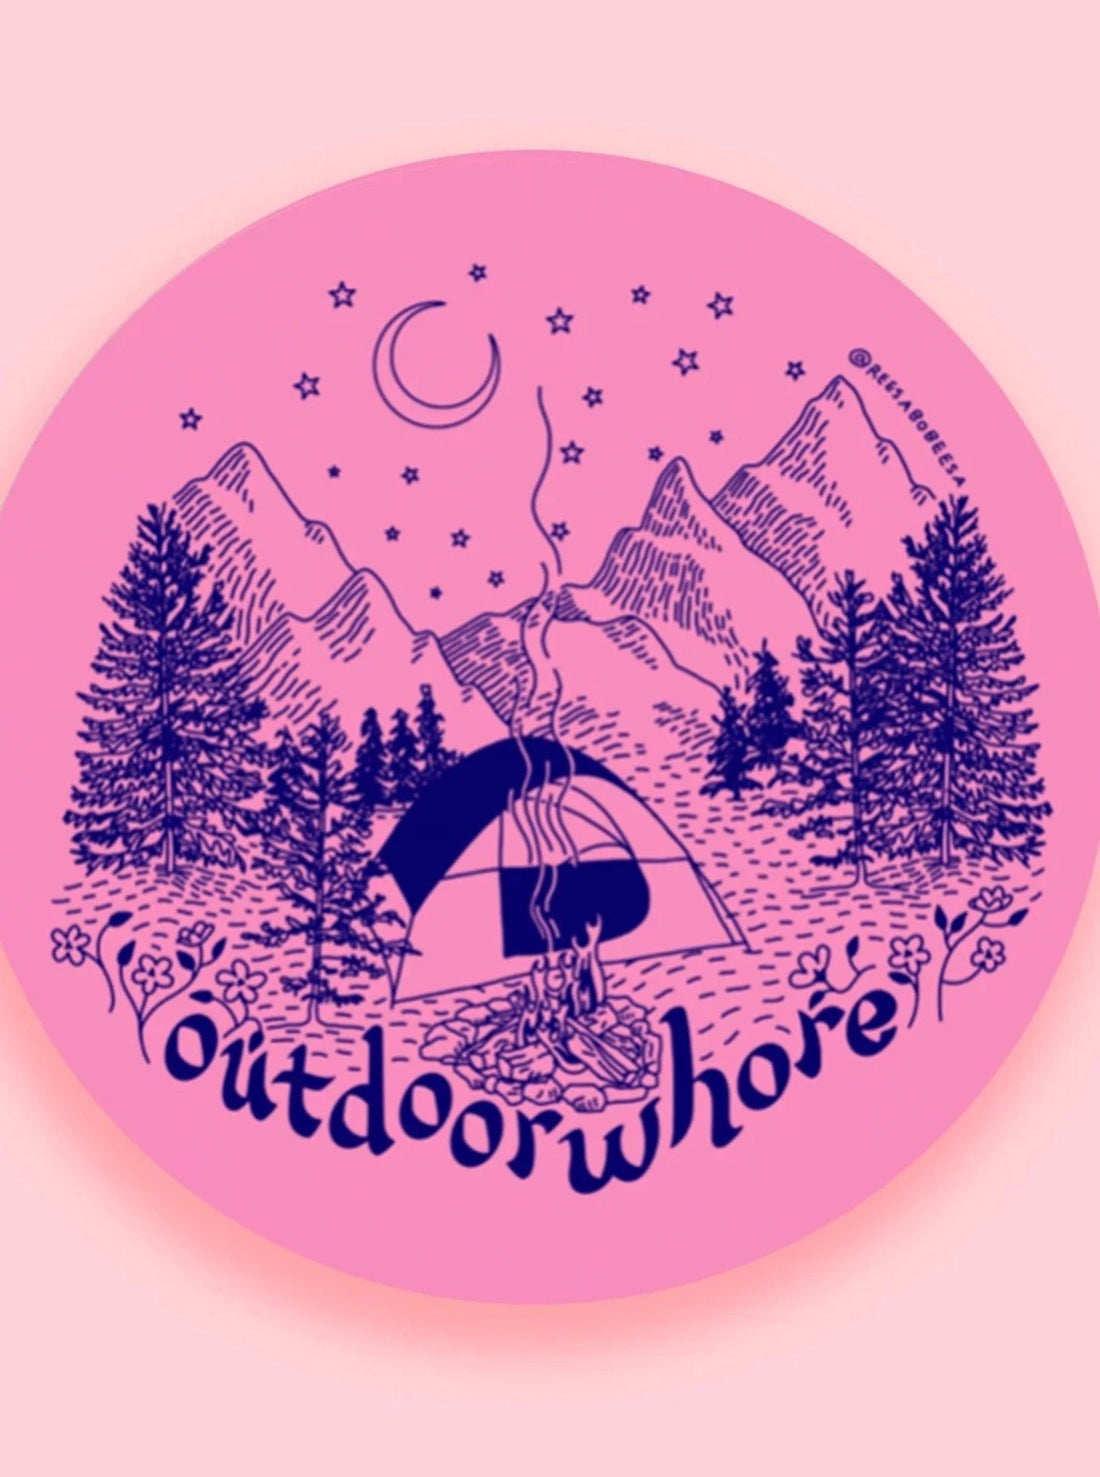 Outdoor Whore Sticker